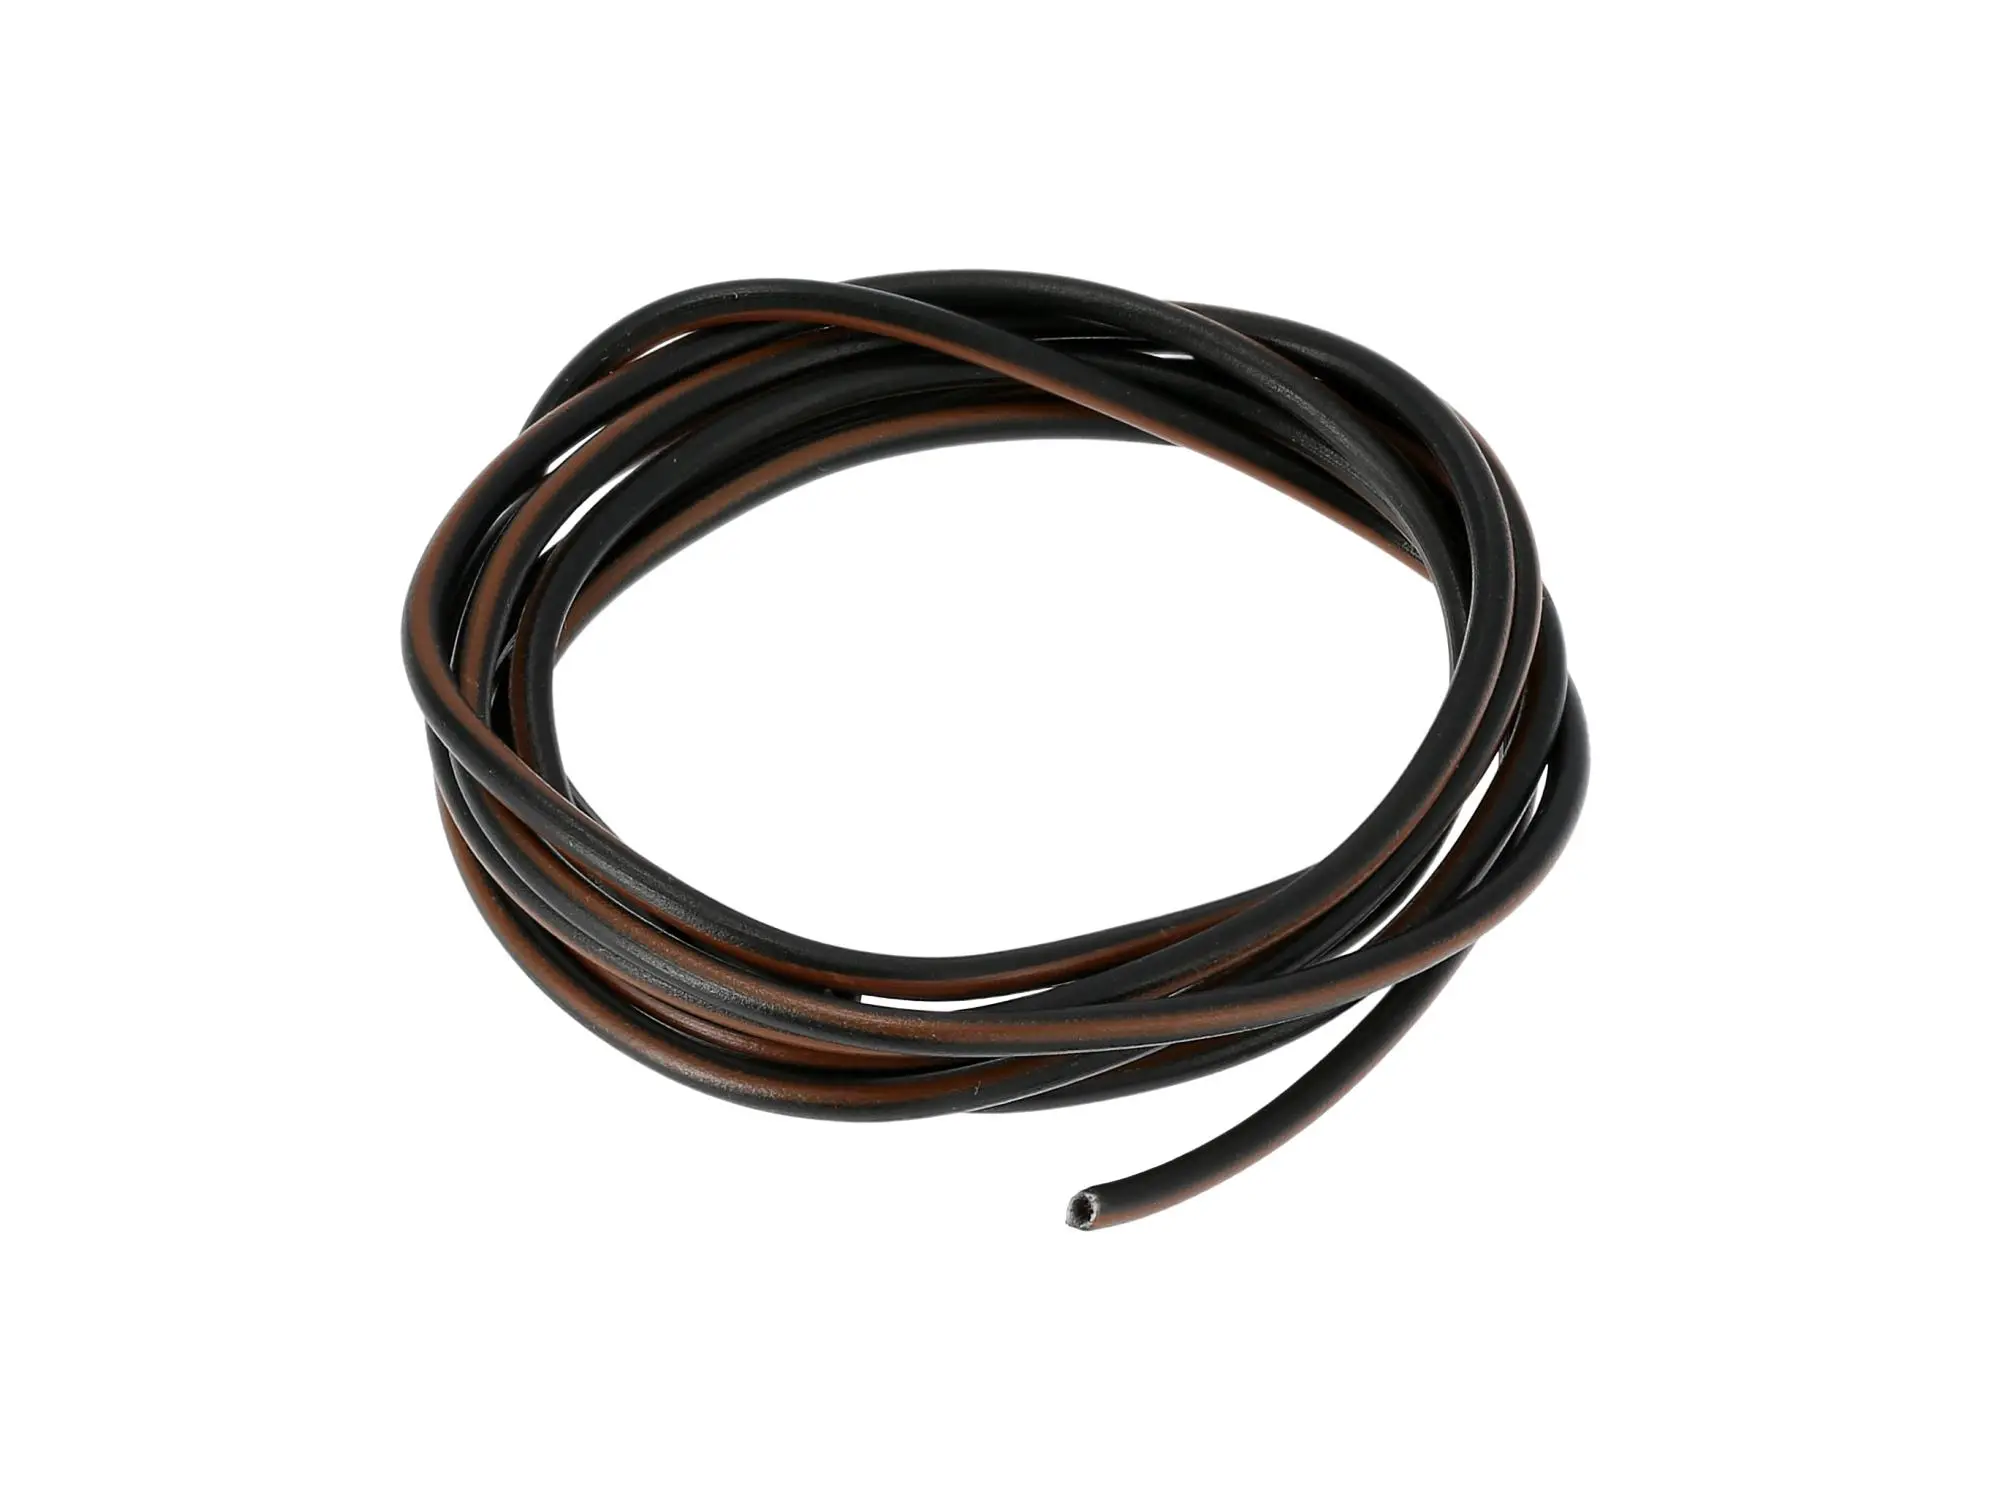 Kabel - Schwarz/Braun 0,50mm² Fahrzeugleitung - 1m, Art.-Nr.: 10001786 - Bild 1